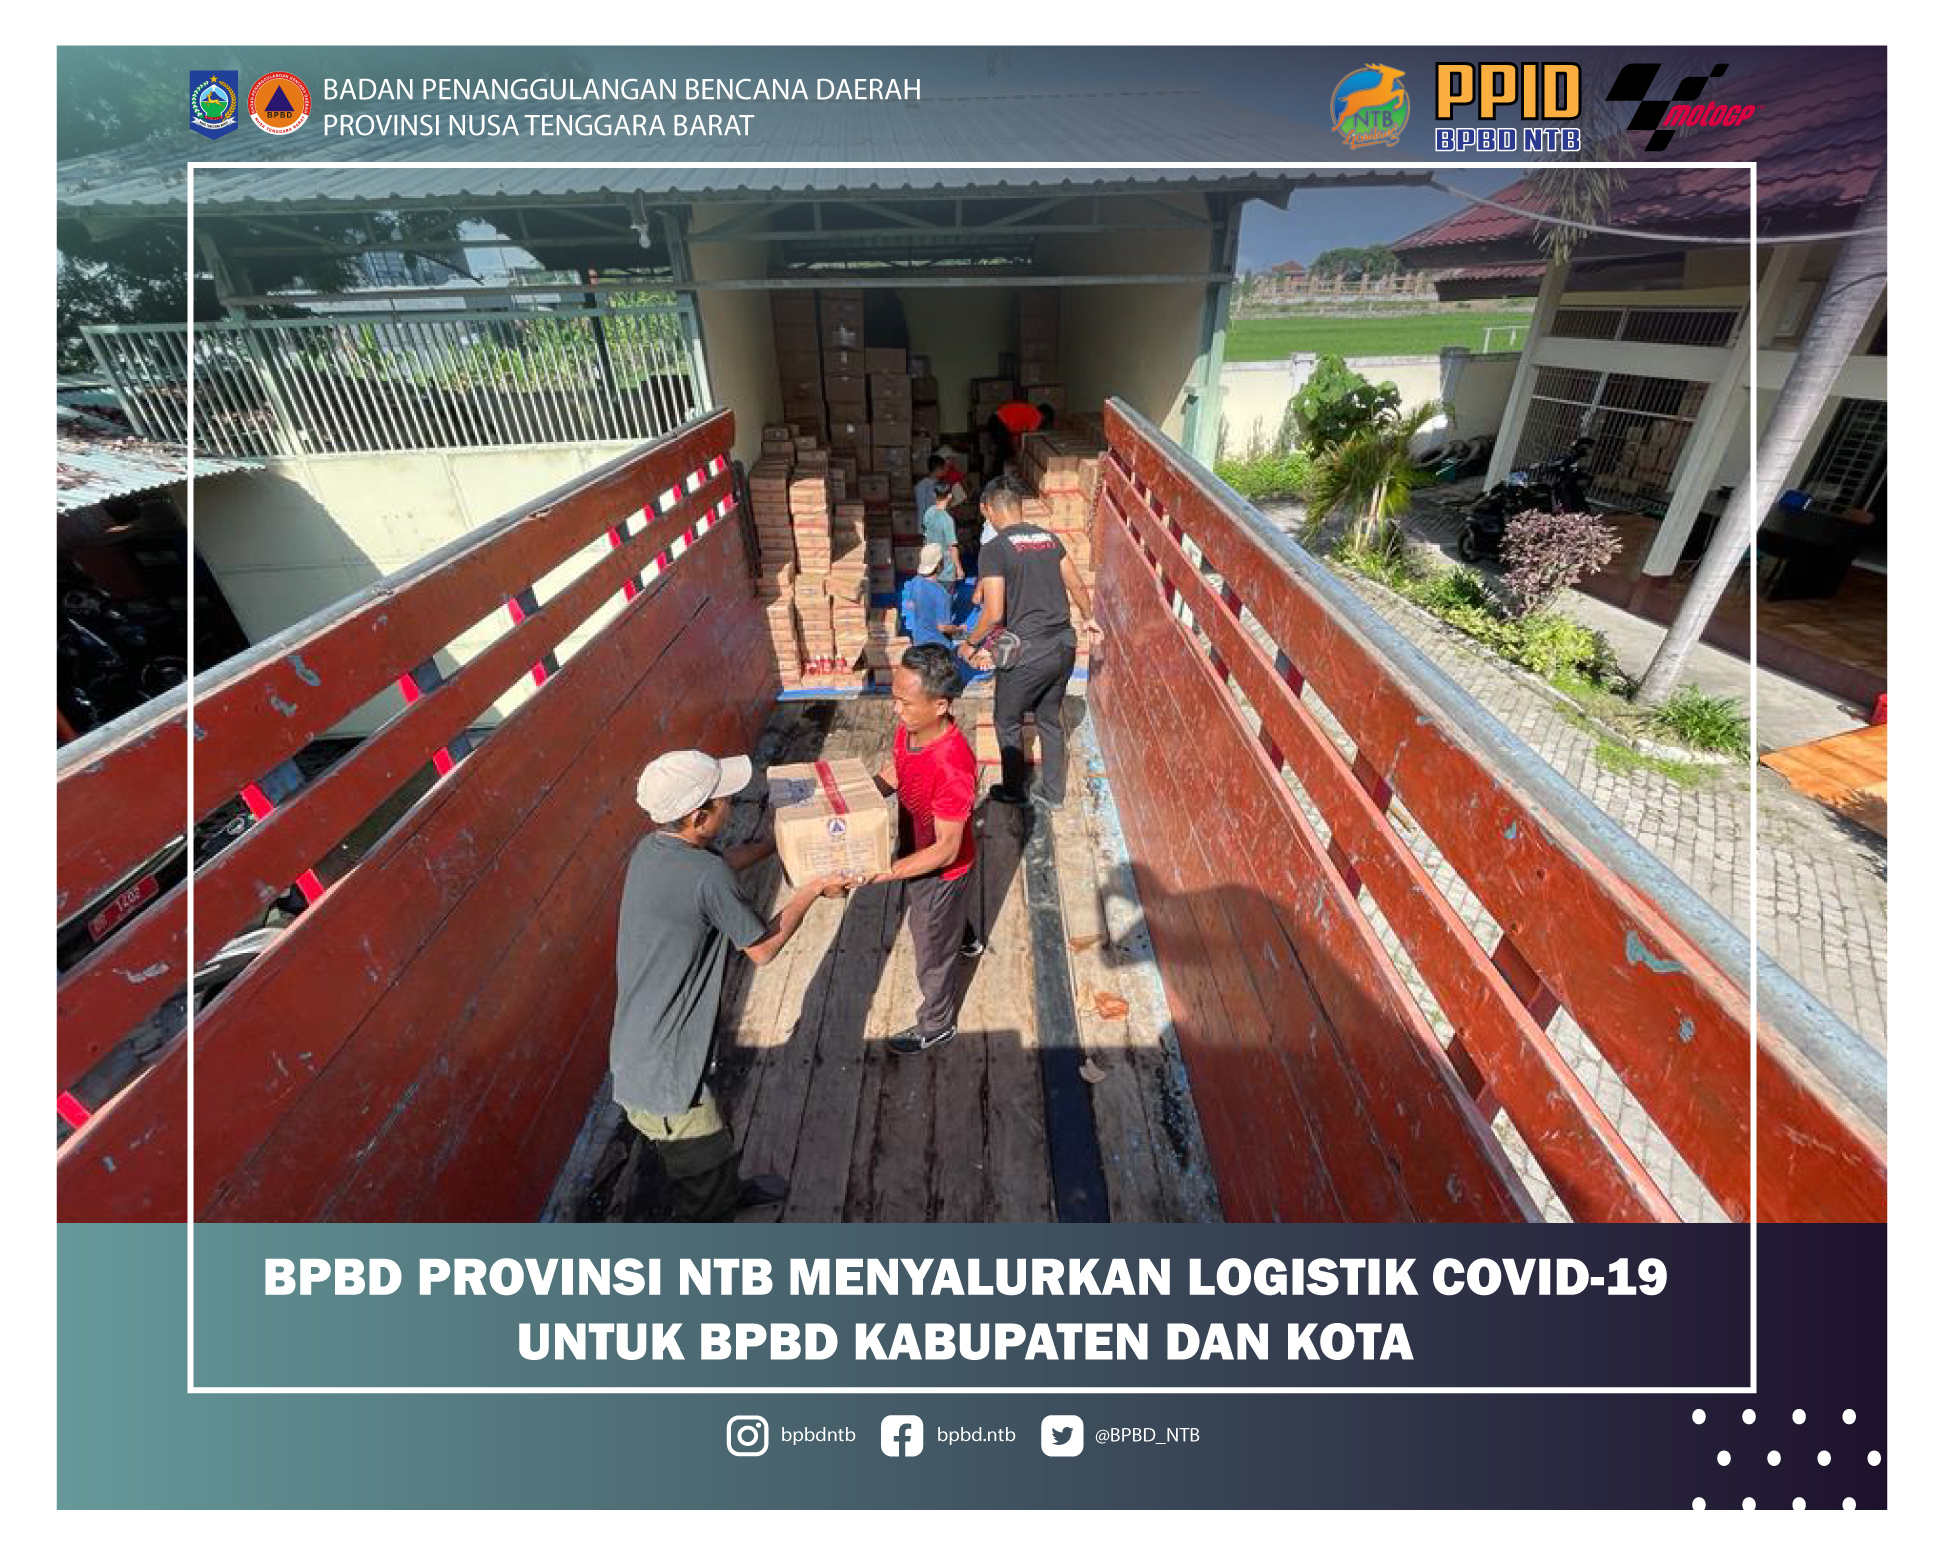 BPBD Provinsi NTB Menyalurkan Logistik Covid-19 Ke BPBD Kabupaten Dan Kota